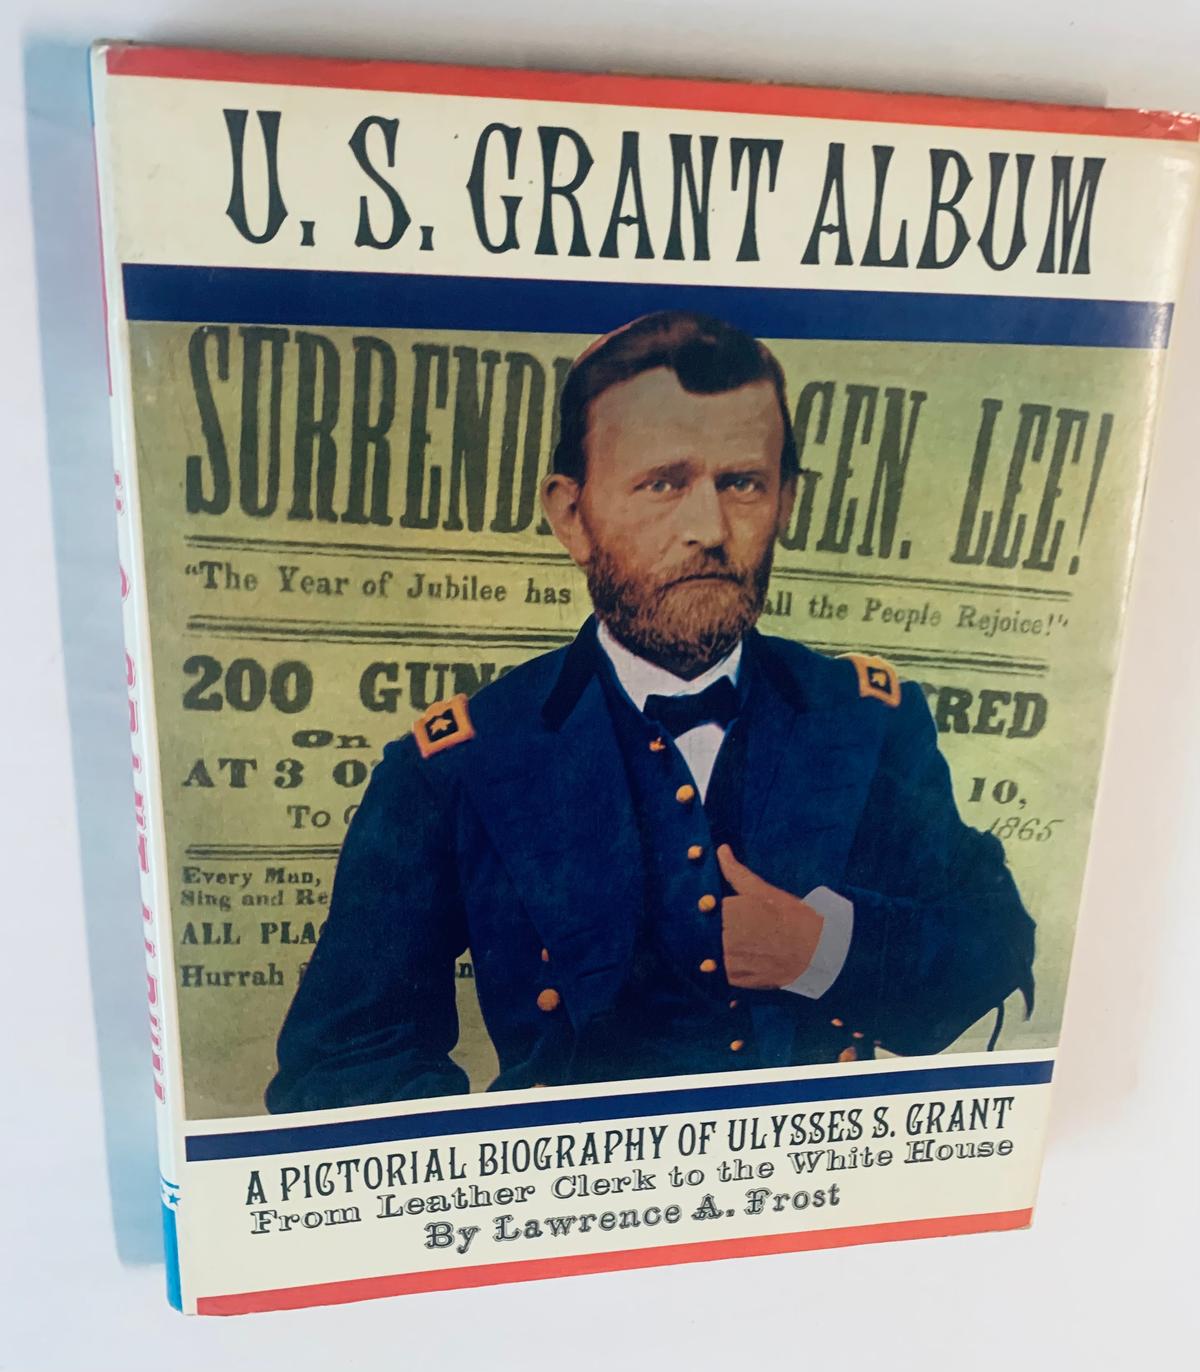 U.S. GRANT Album: A Pictorial Biography of Ulysses S. Grant